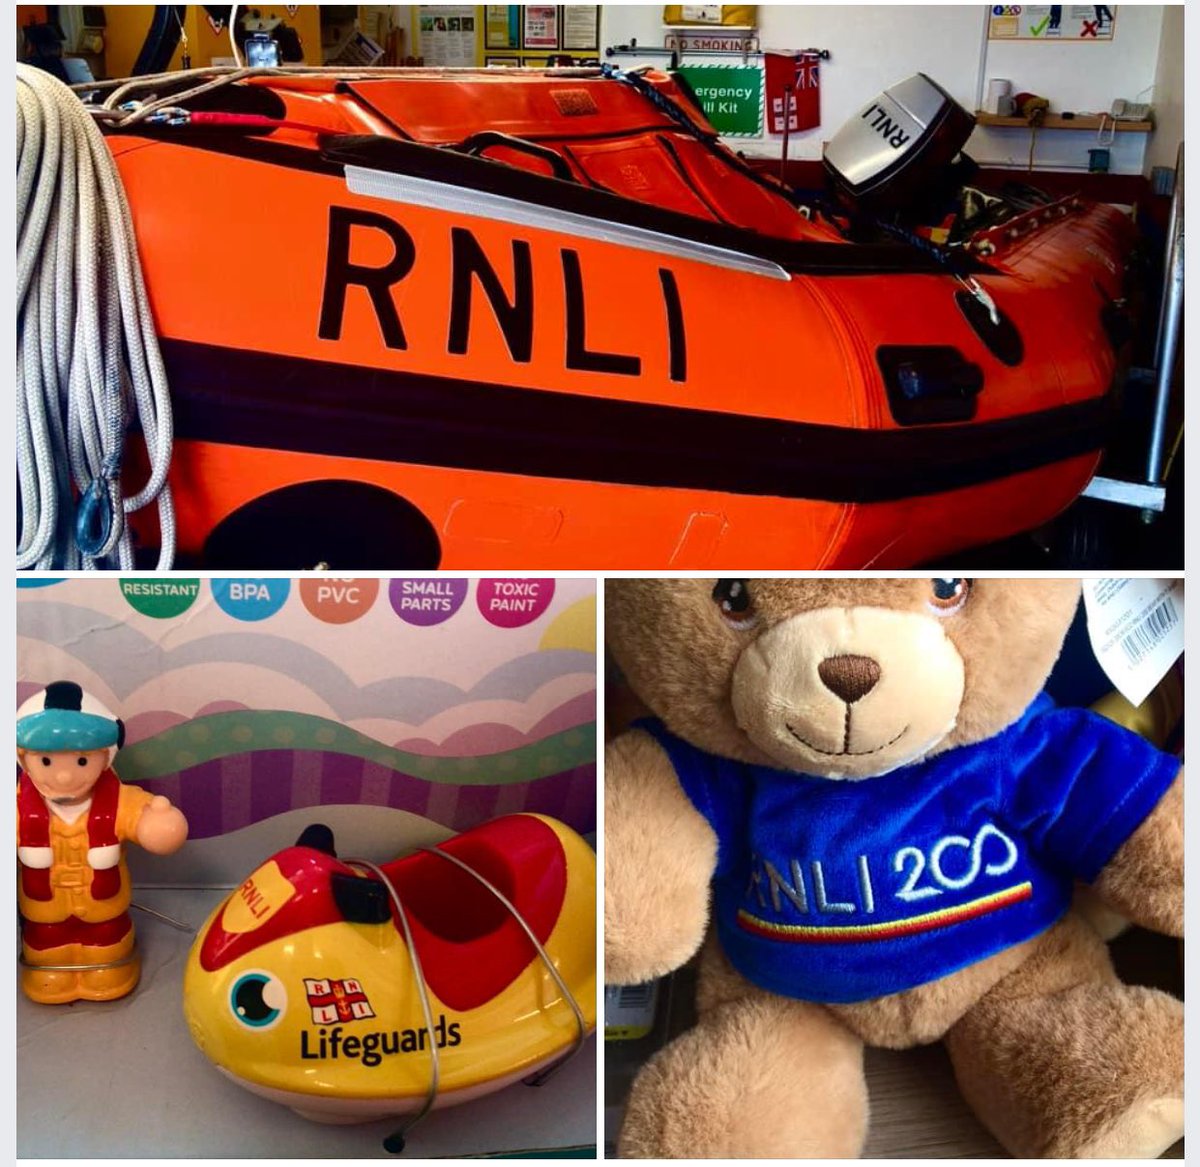 @rnli @RNLI @ConwyLifeboat #rnli200 #savinglives #savinglivesatsea #rnliambassador #conwy #lifeboats #rib #seasafety #watersafety